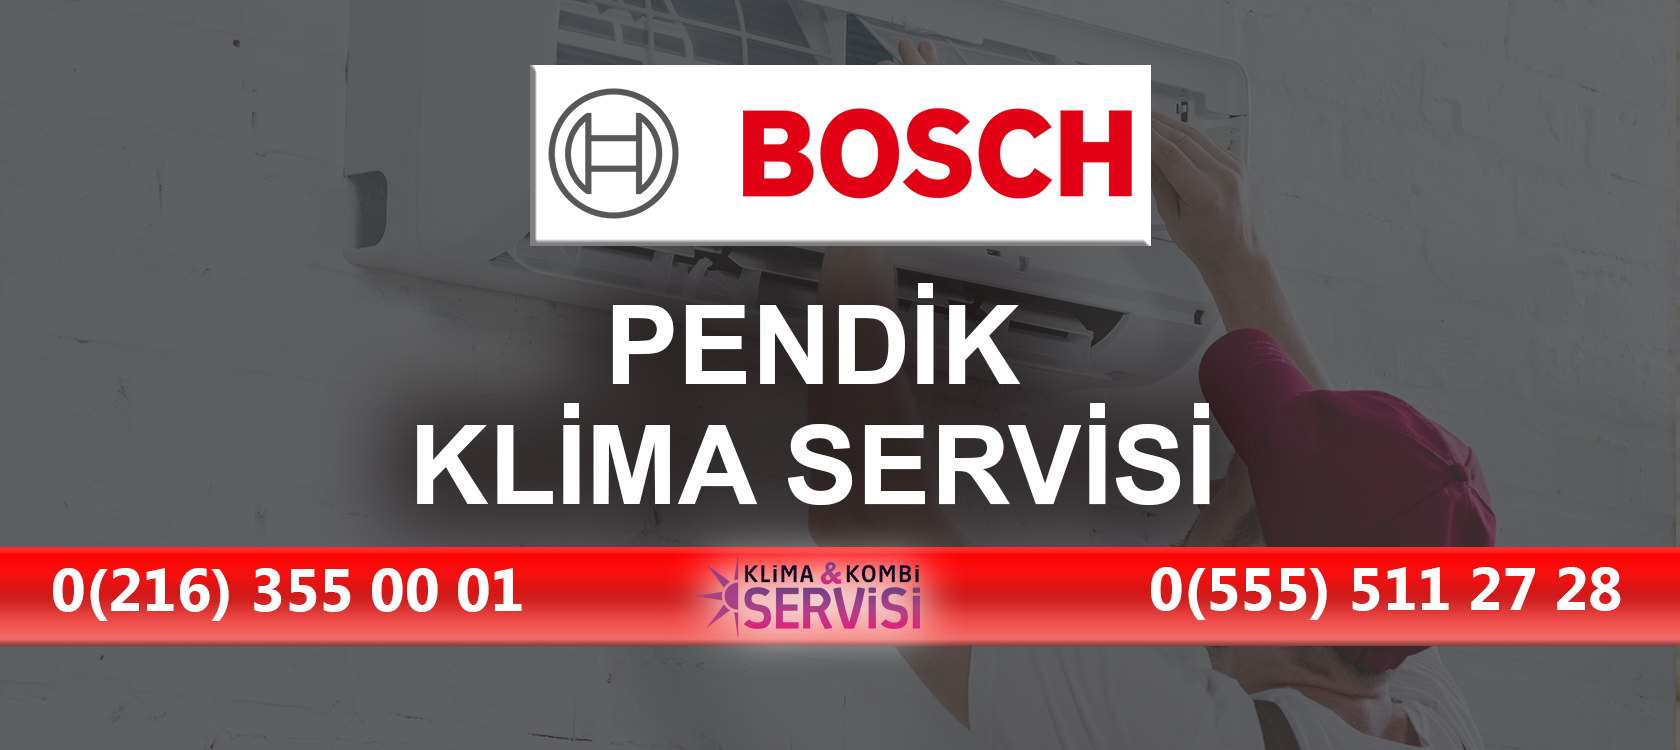 Pendik Bosch Klima Servisi